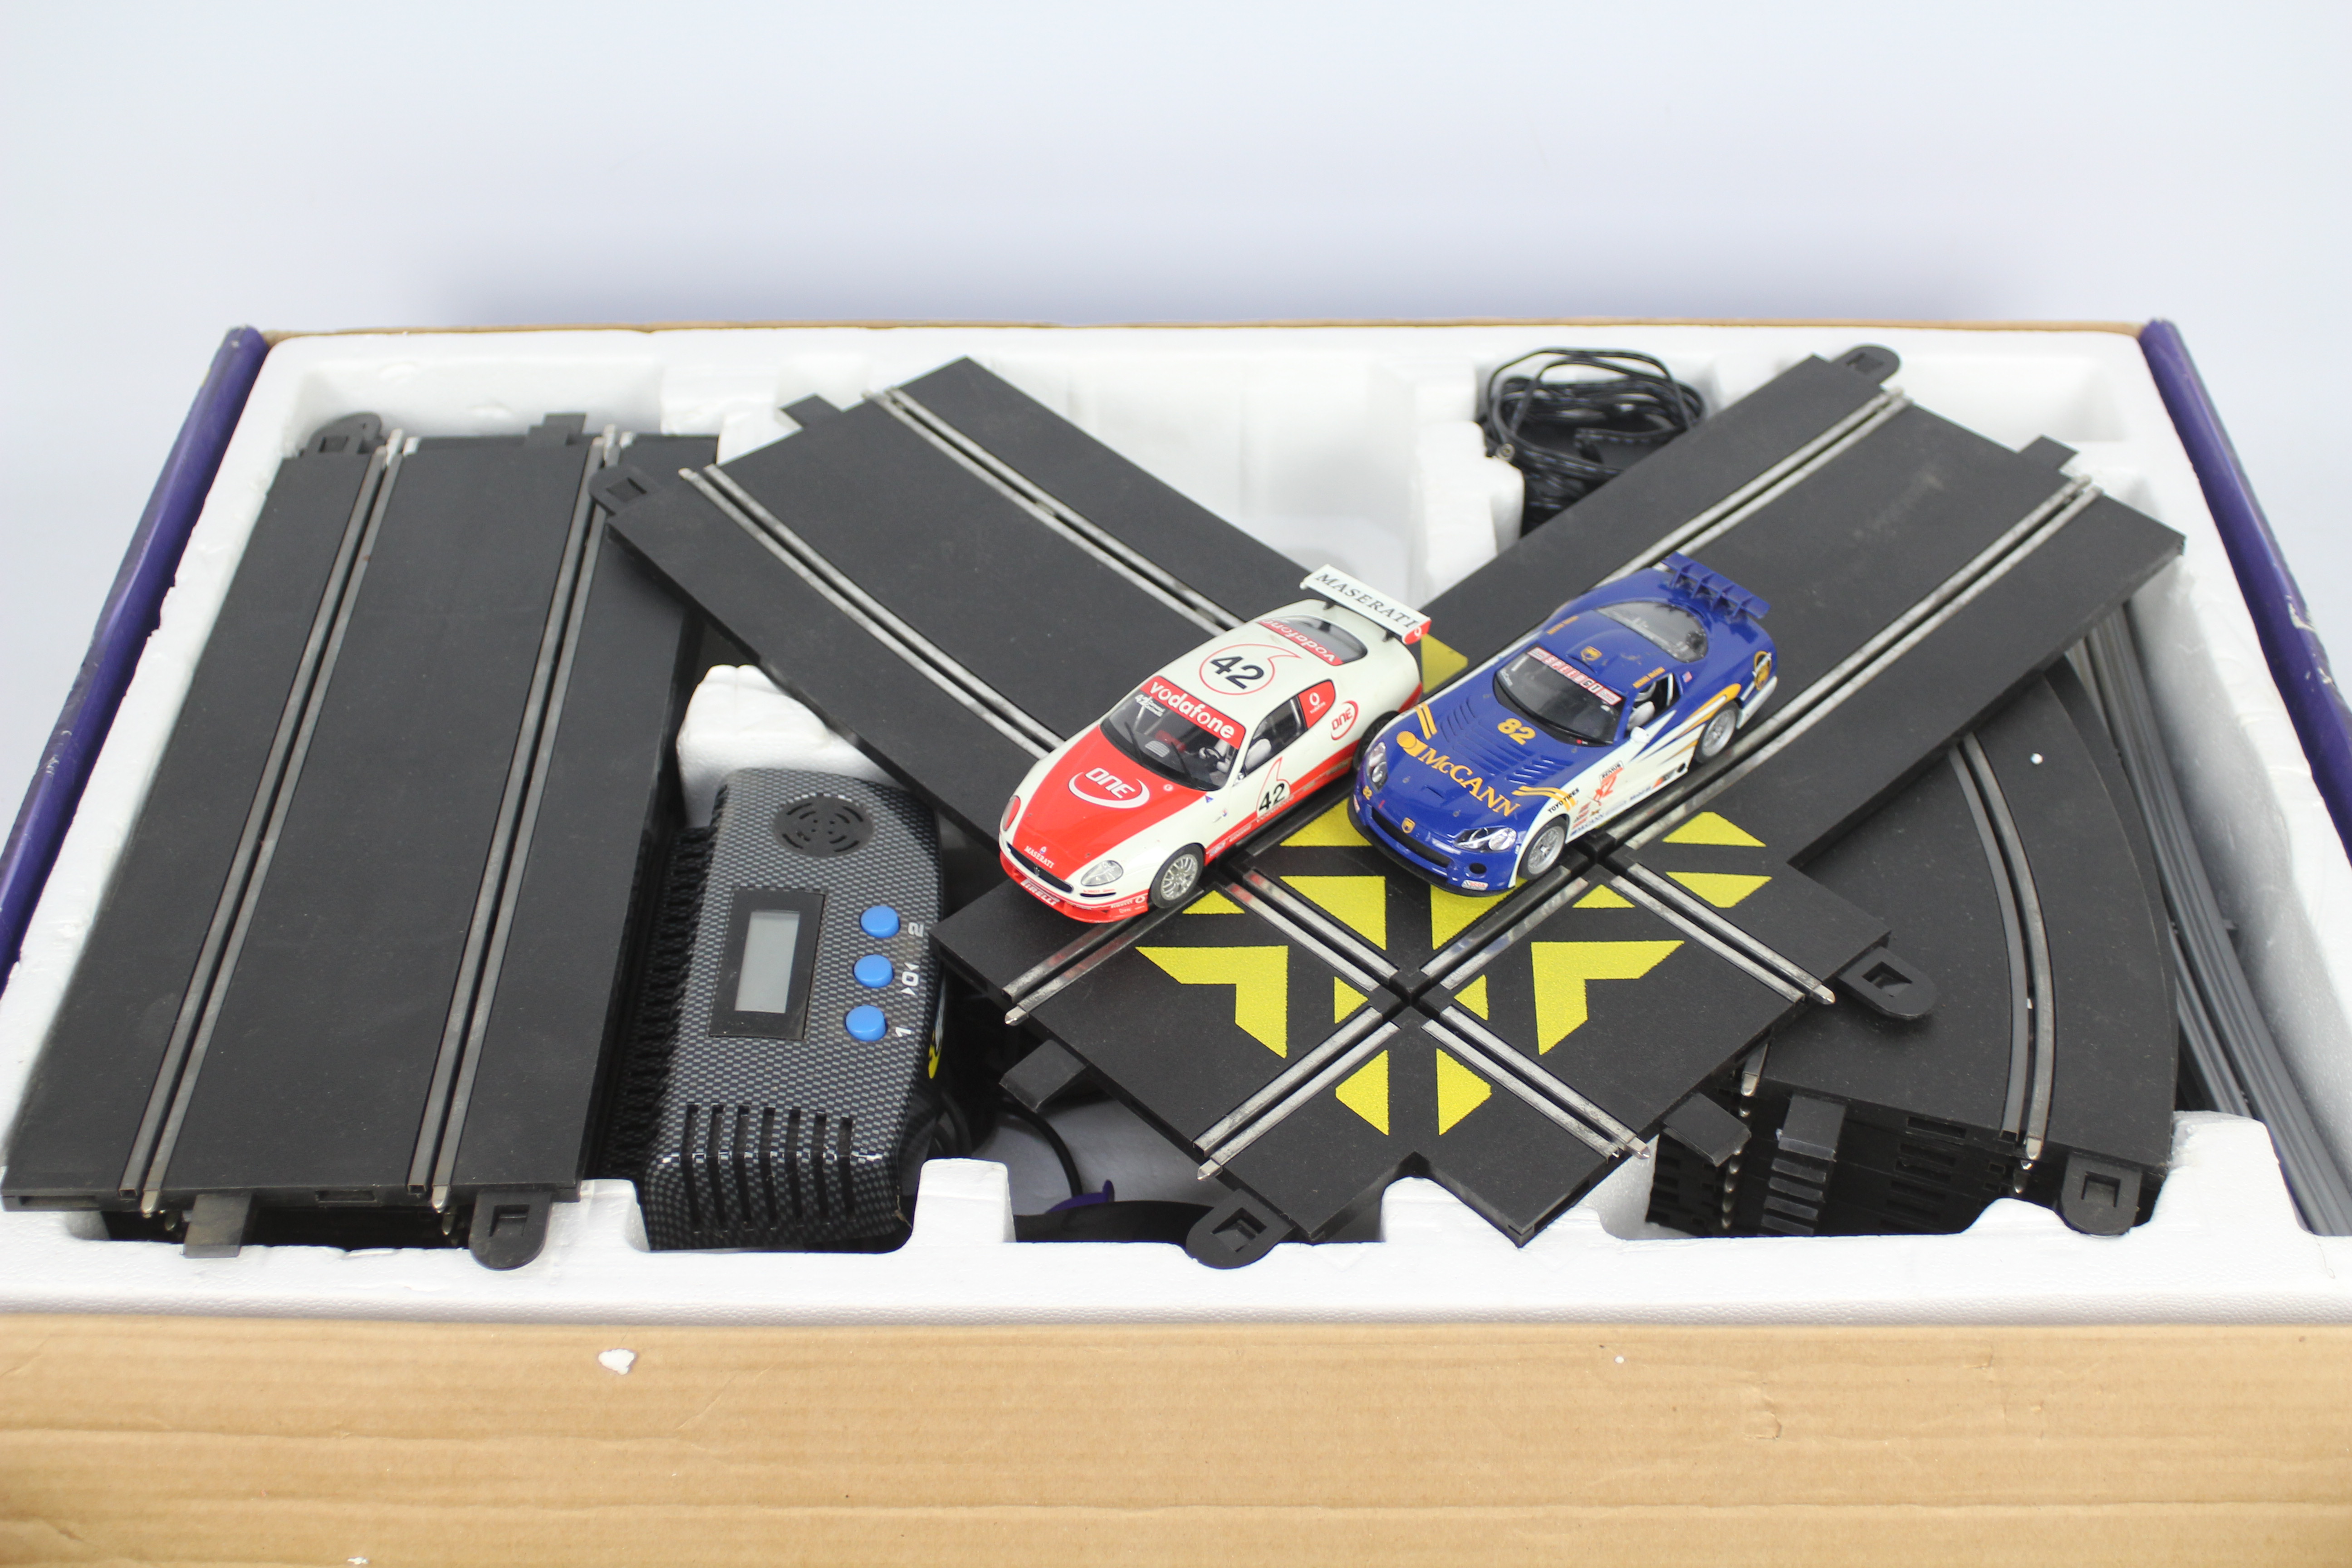 Scalextric - 2 x boxes sets, # C1166L Maserati Challenge and # C653 Grand Prix set. - Image 4 of 5